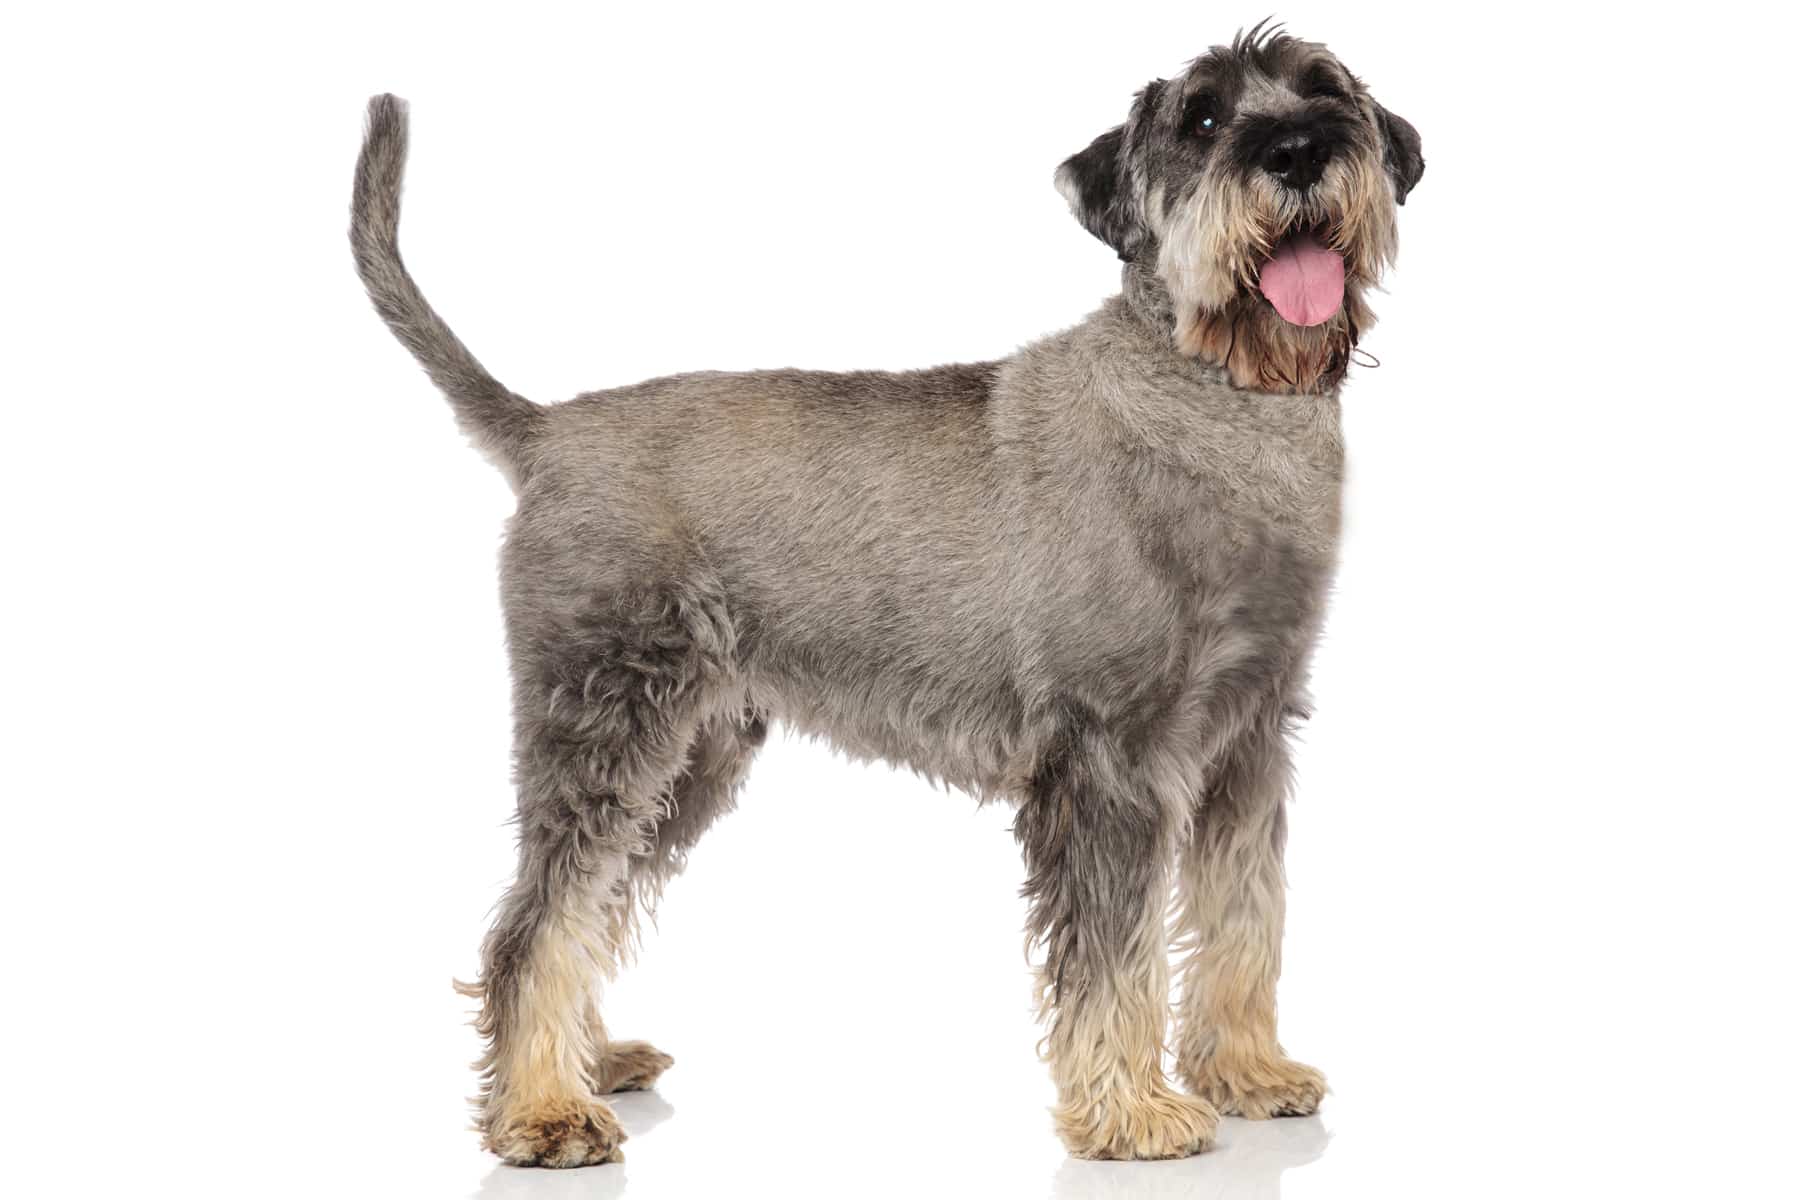 Middle schnauzer dog breed profile picture